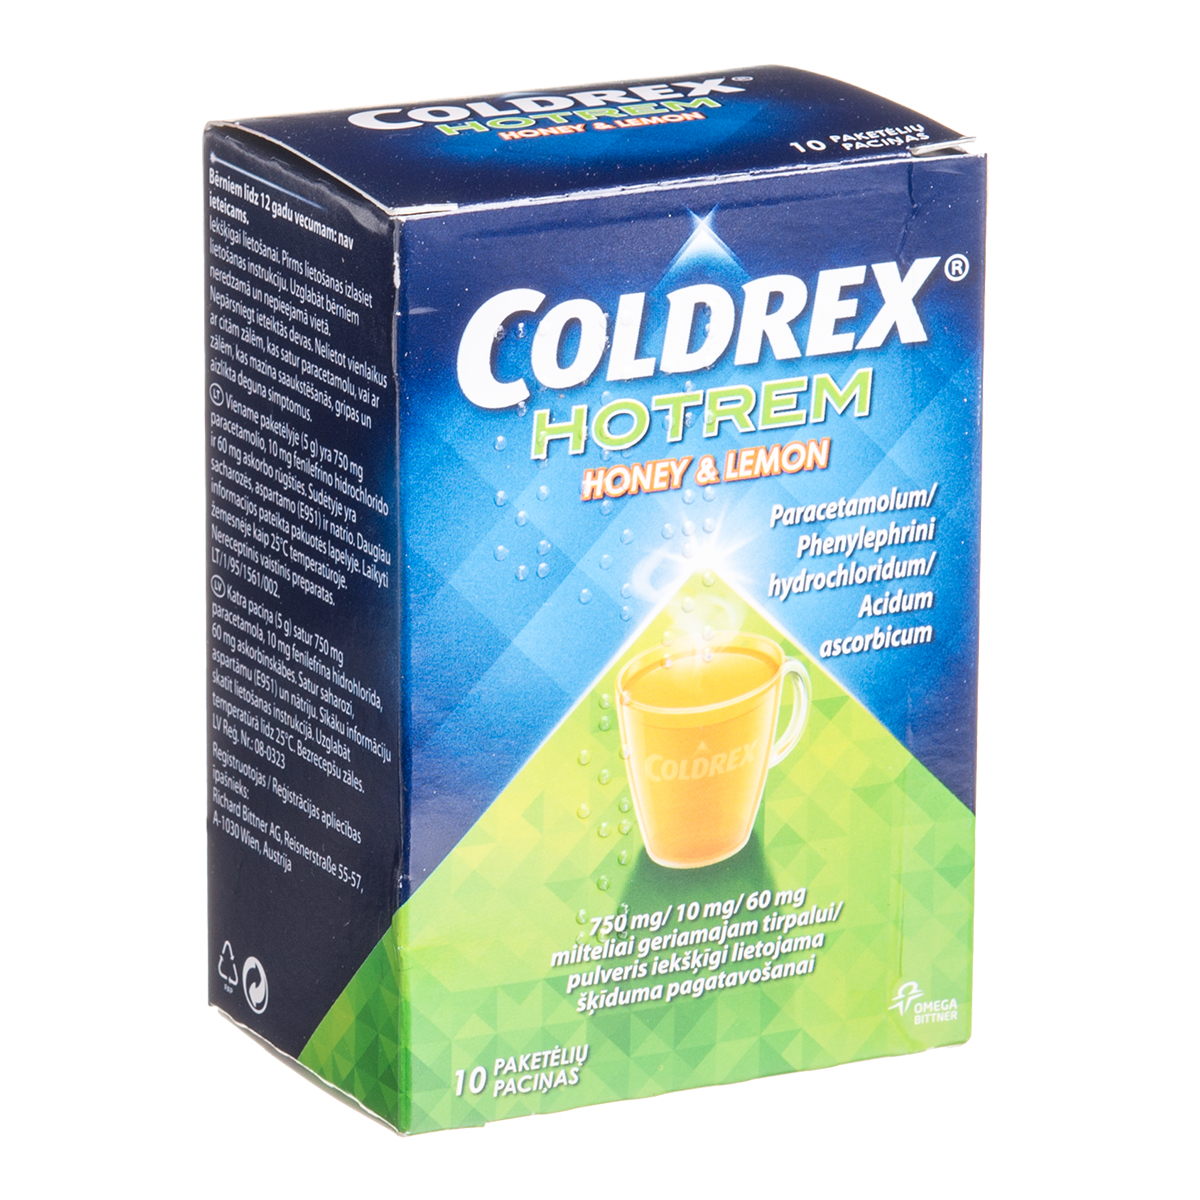 COLDREX HOTREM HONEY & LEMON, 750 mg/10 mg/60 mg, milteliai geriamajam tirpalui, N10